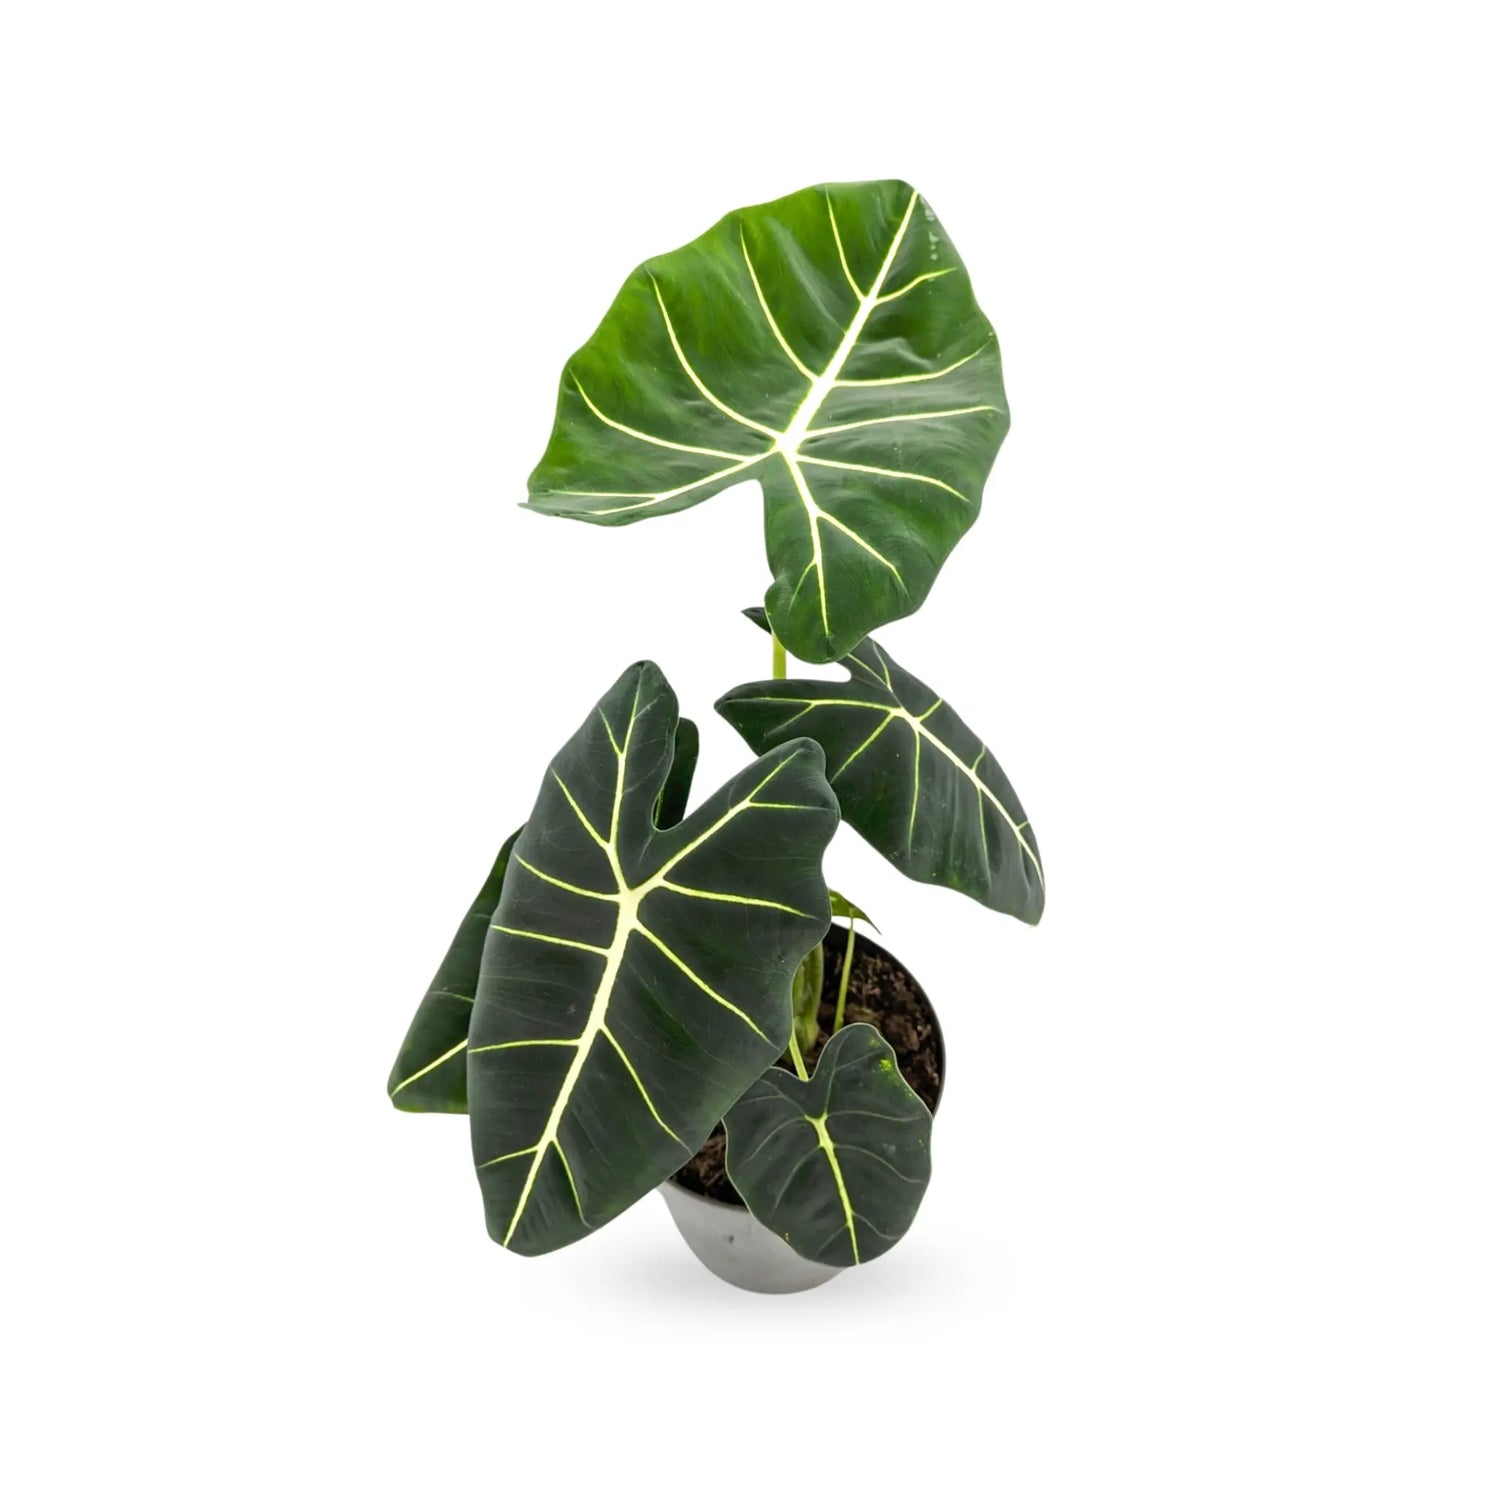 Alocasia Frydek - African Mask Plant Leaf Culture